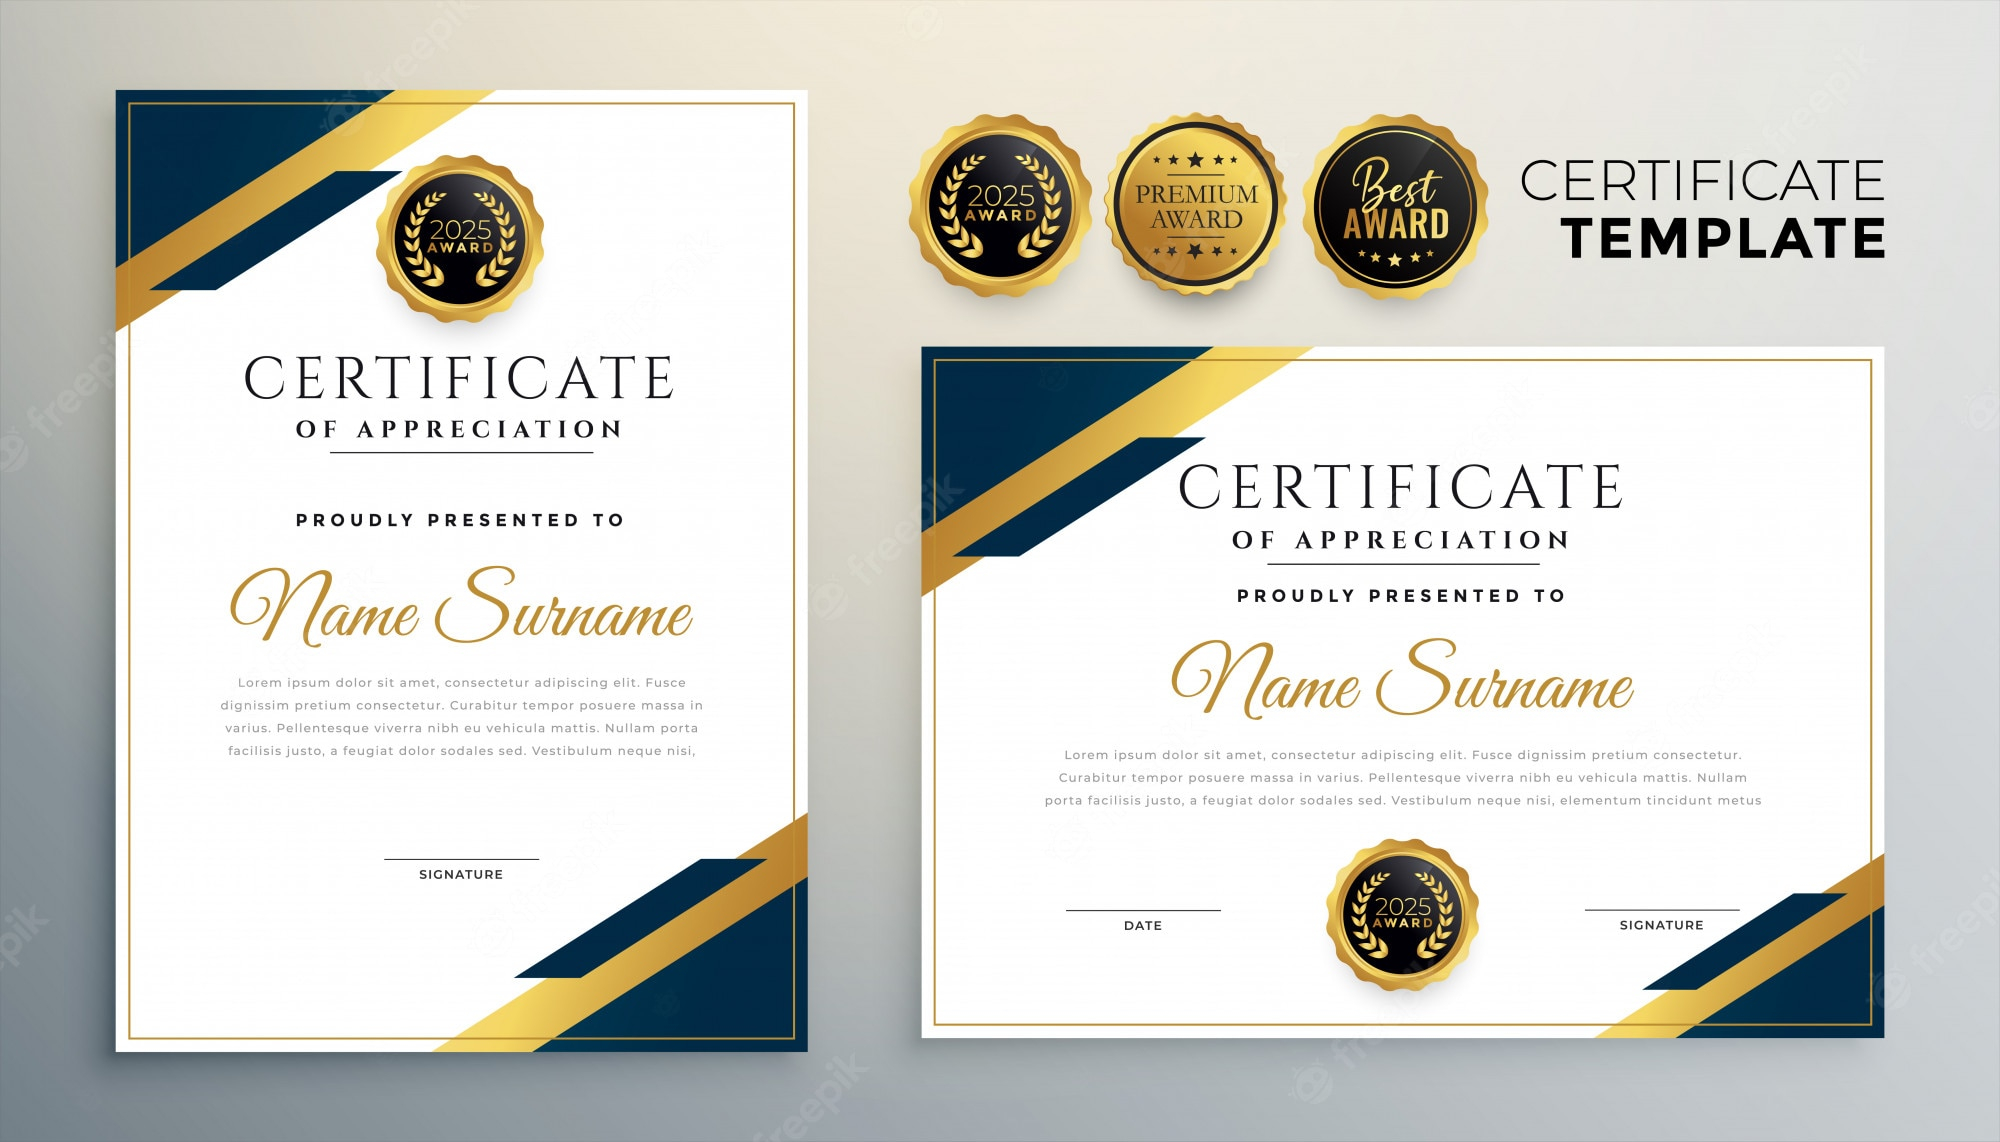 Certificate appreciation Images  Free Vectors, Stock Photos & PSD Regarding Formal Certificate Of Appreciation Template